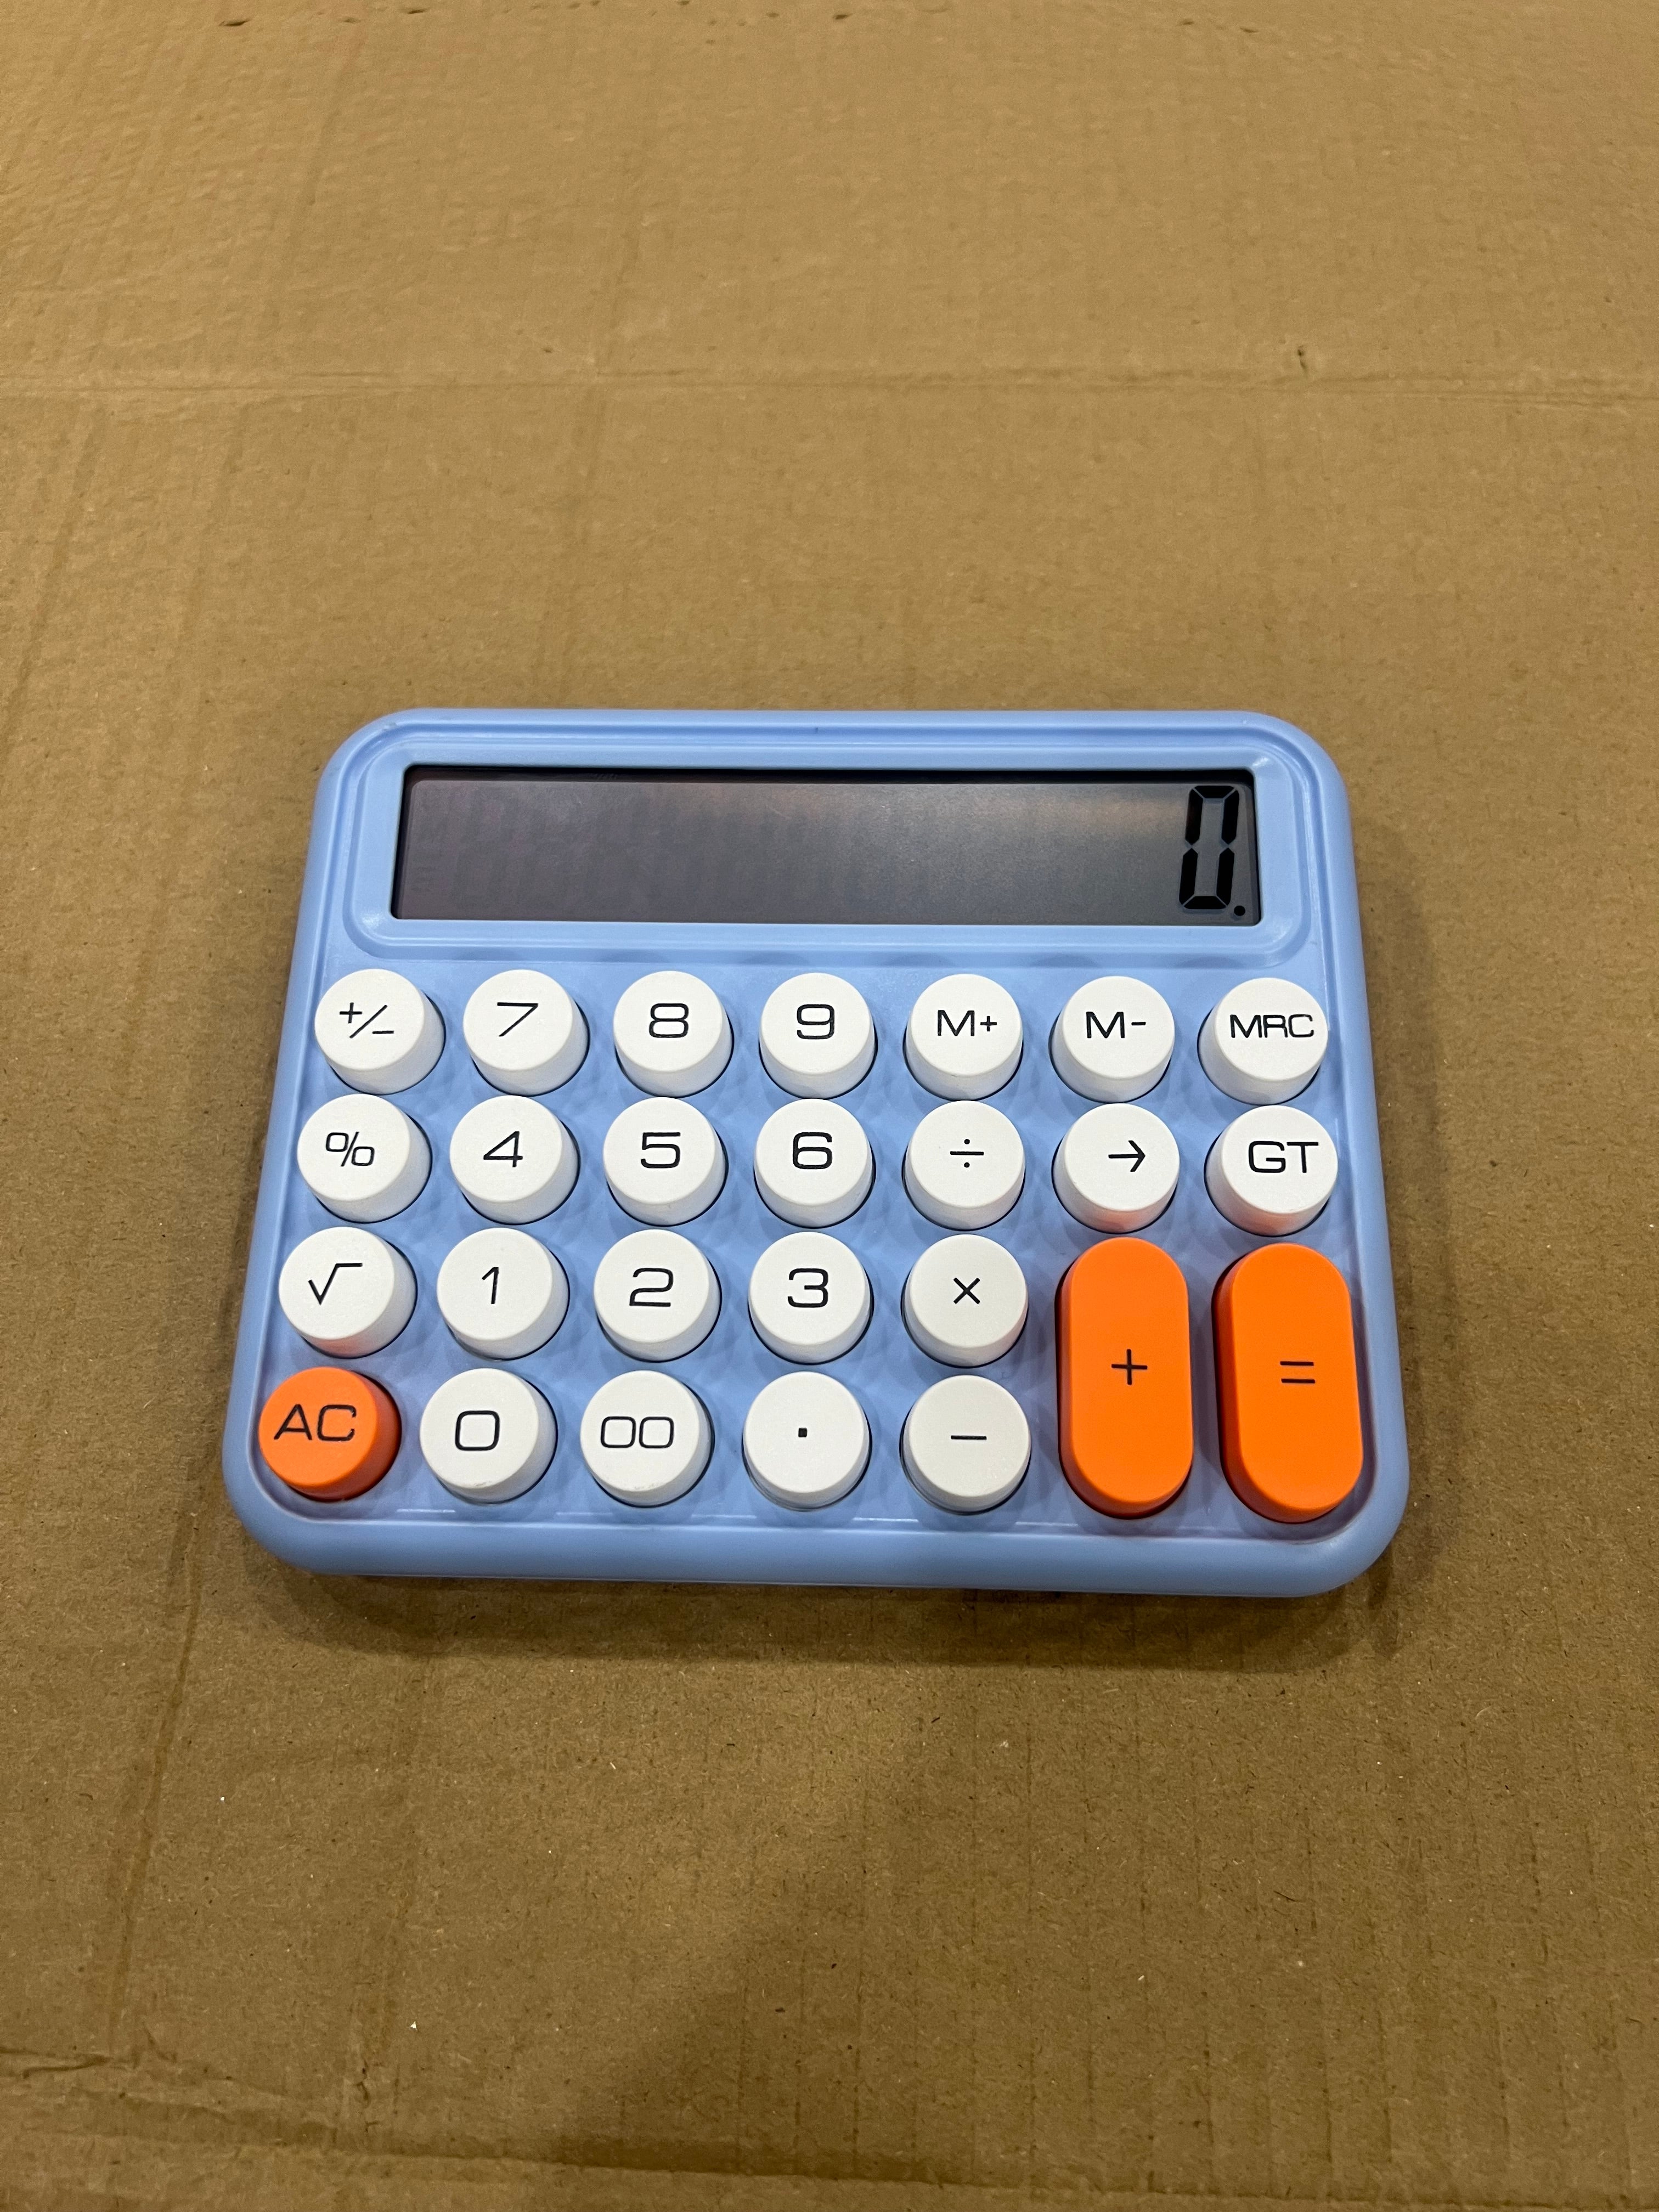 Imported Karuida Best Quality Calculator